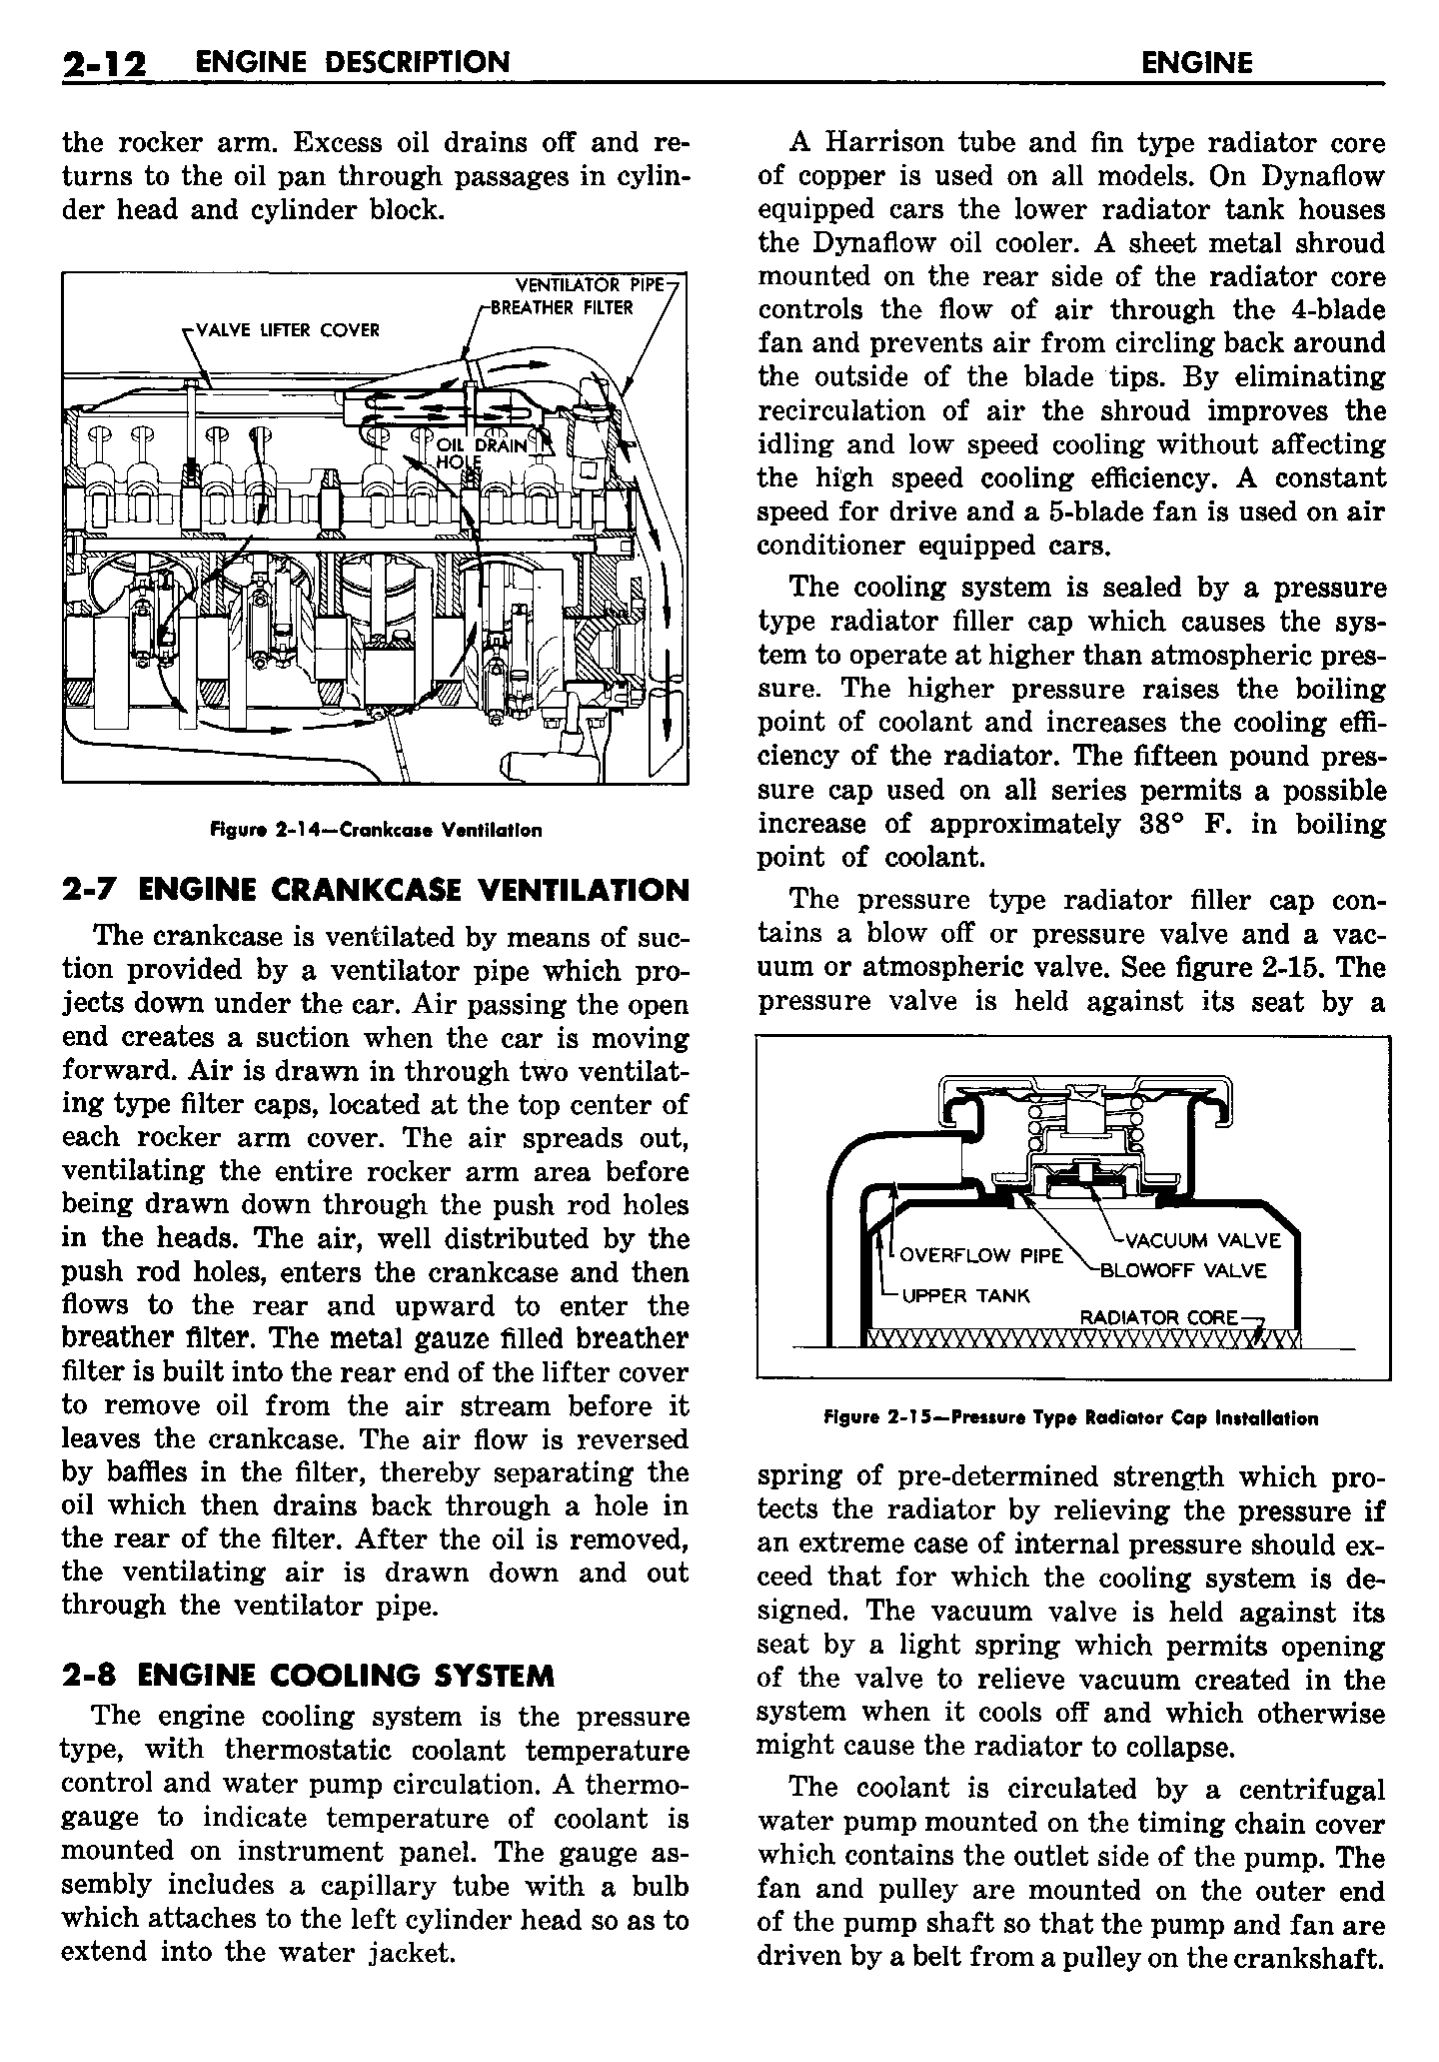 n_03 1958 Buick Shop Manual - Engine_12.jpg